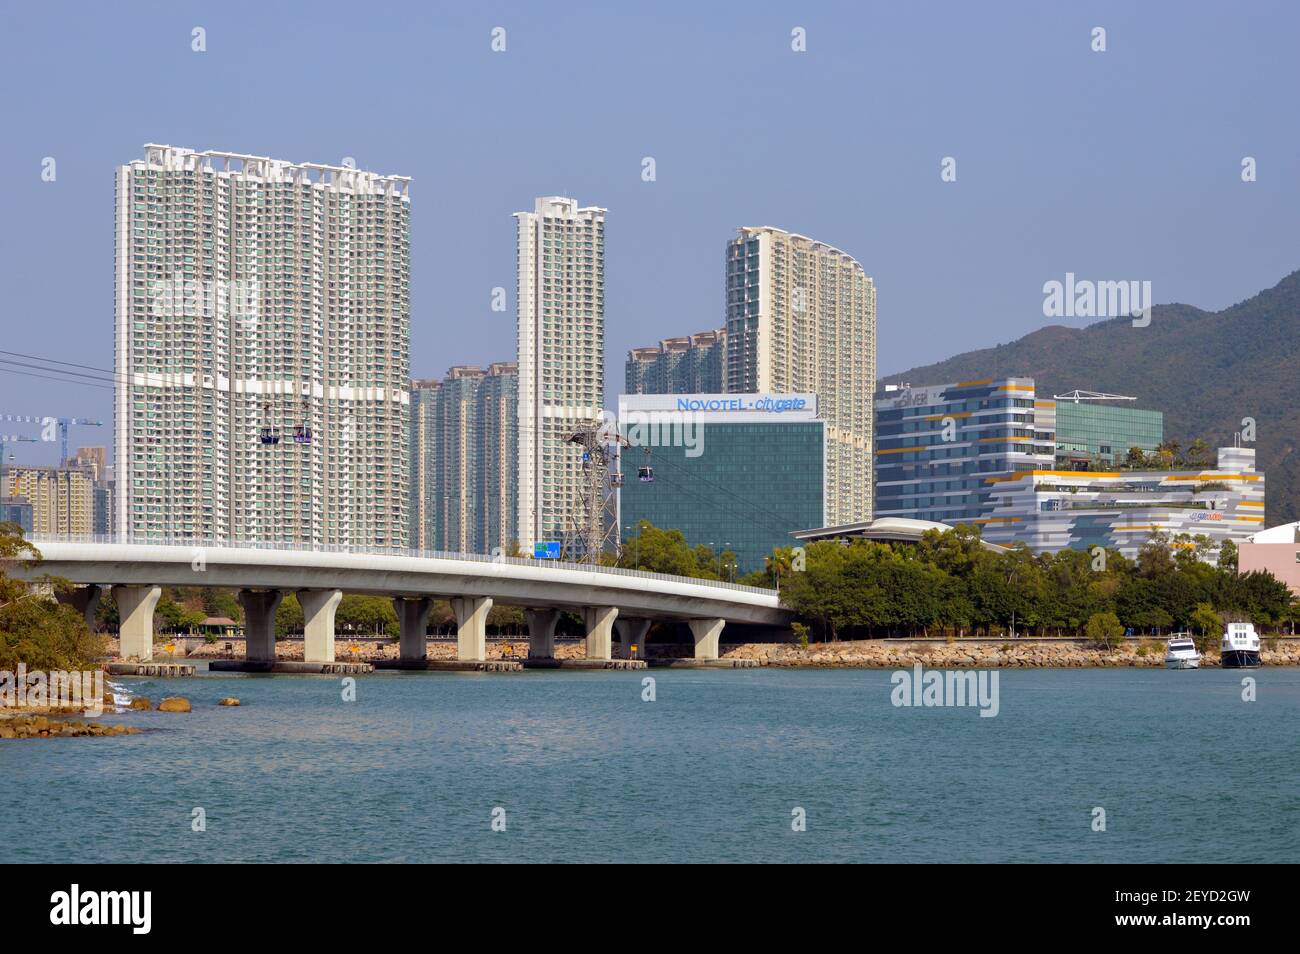 View of Tung Chung new town on Lantau Island, Hong Kong including Novotel Citygate, Coastal Skyline, and Chek Lap Kok South Road (赤鱲角南路) bridge Stock Photo